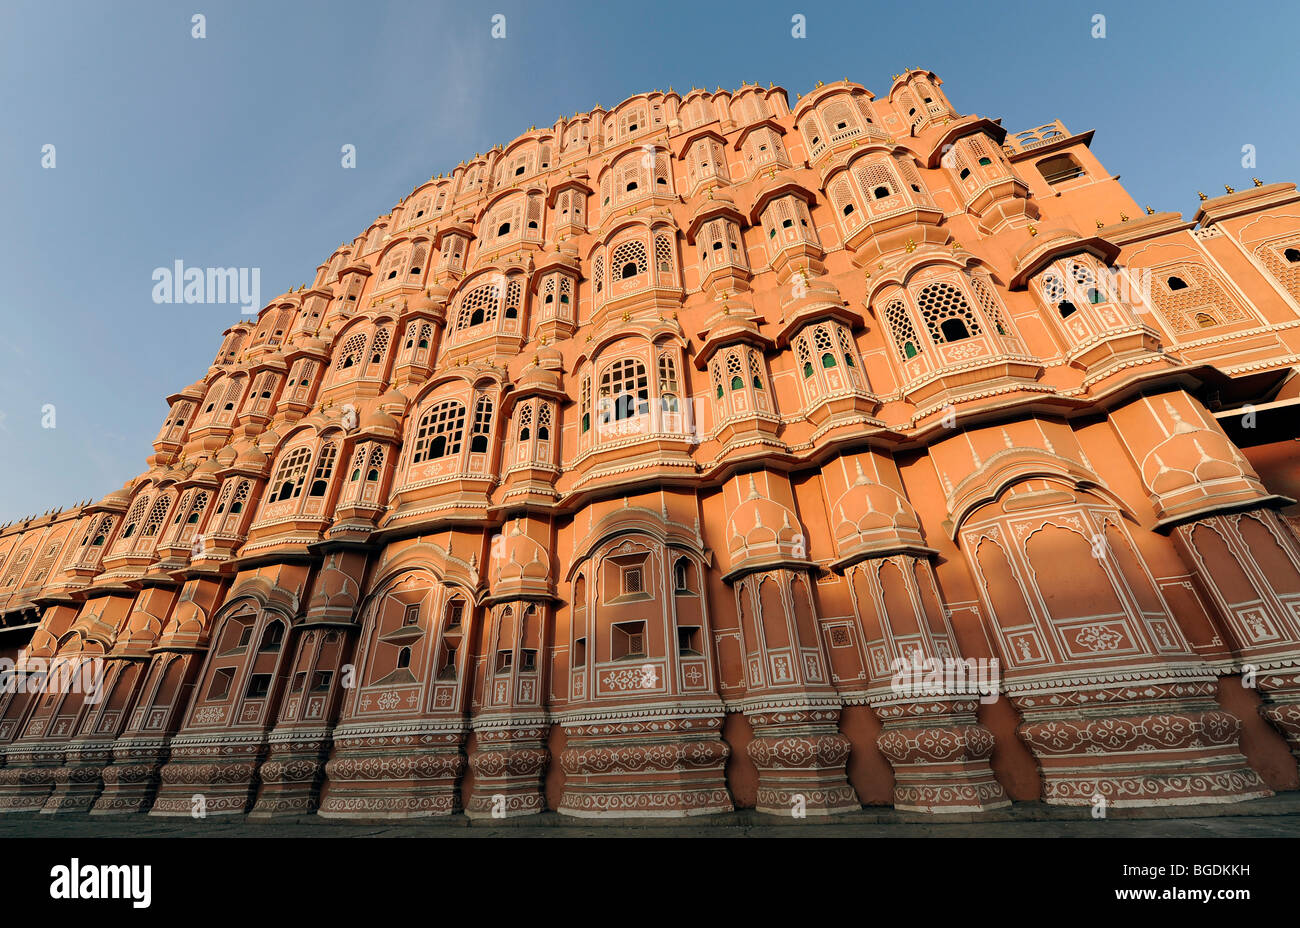 Hawa Mahal, Palace of Winds, Jaipur, Rajasthan, North India, India, South Asia, Asia Stock Photo